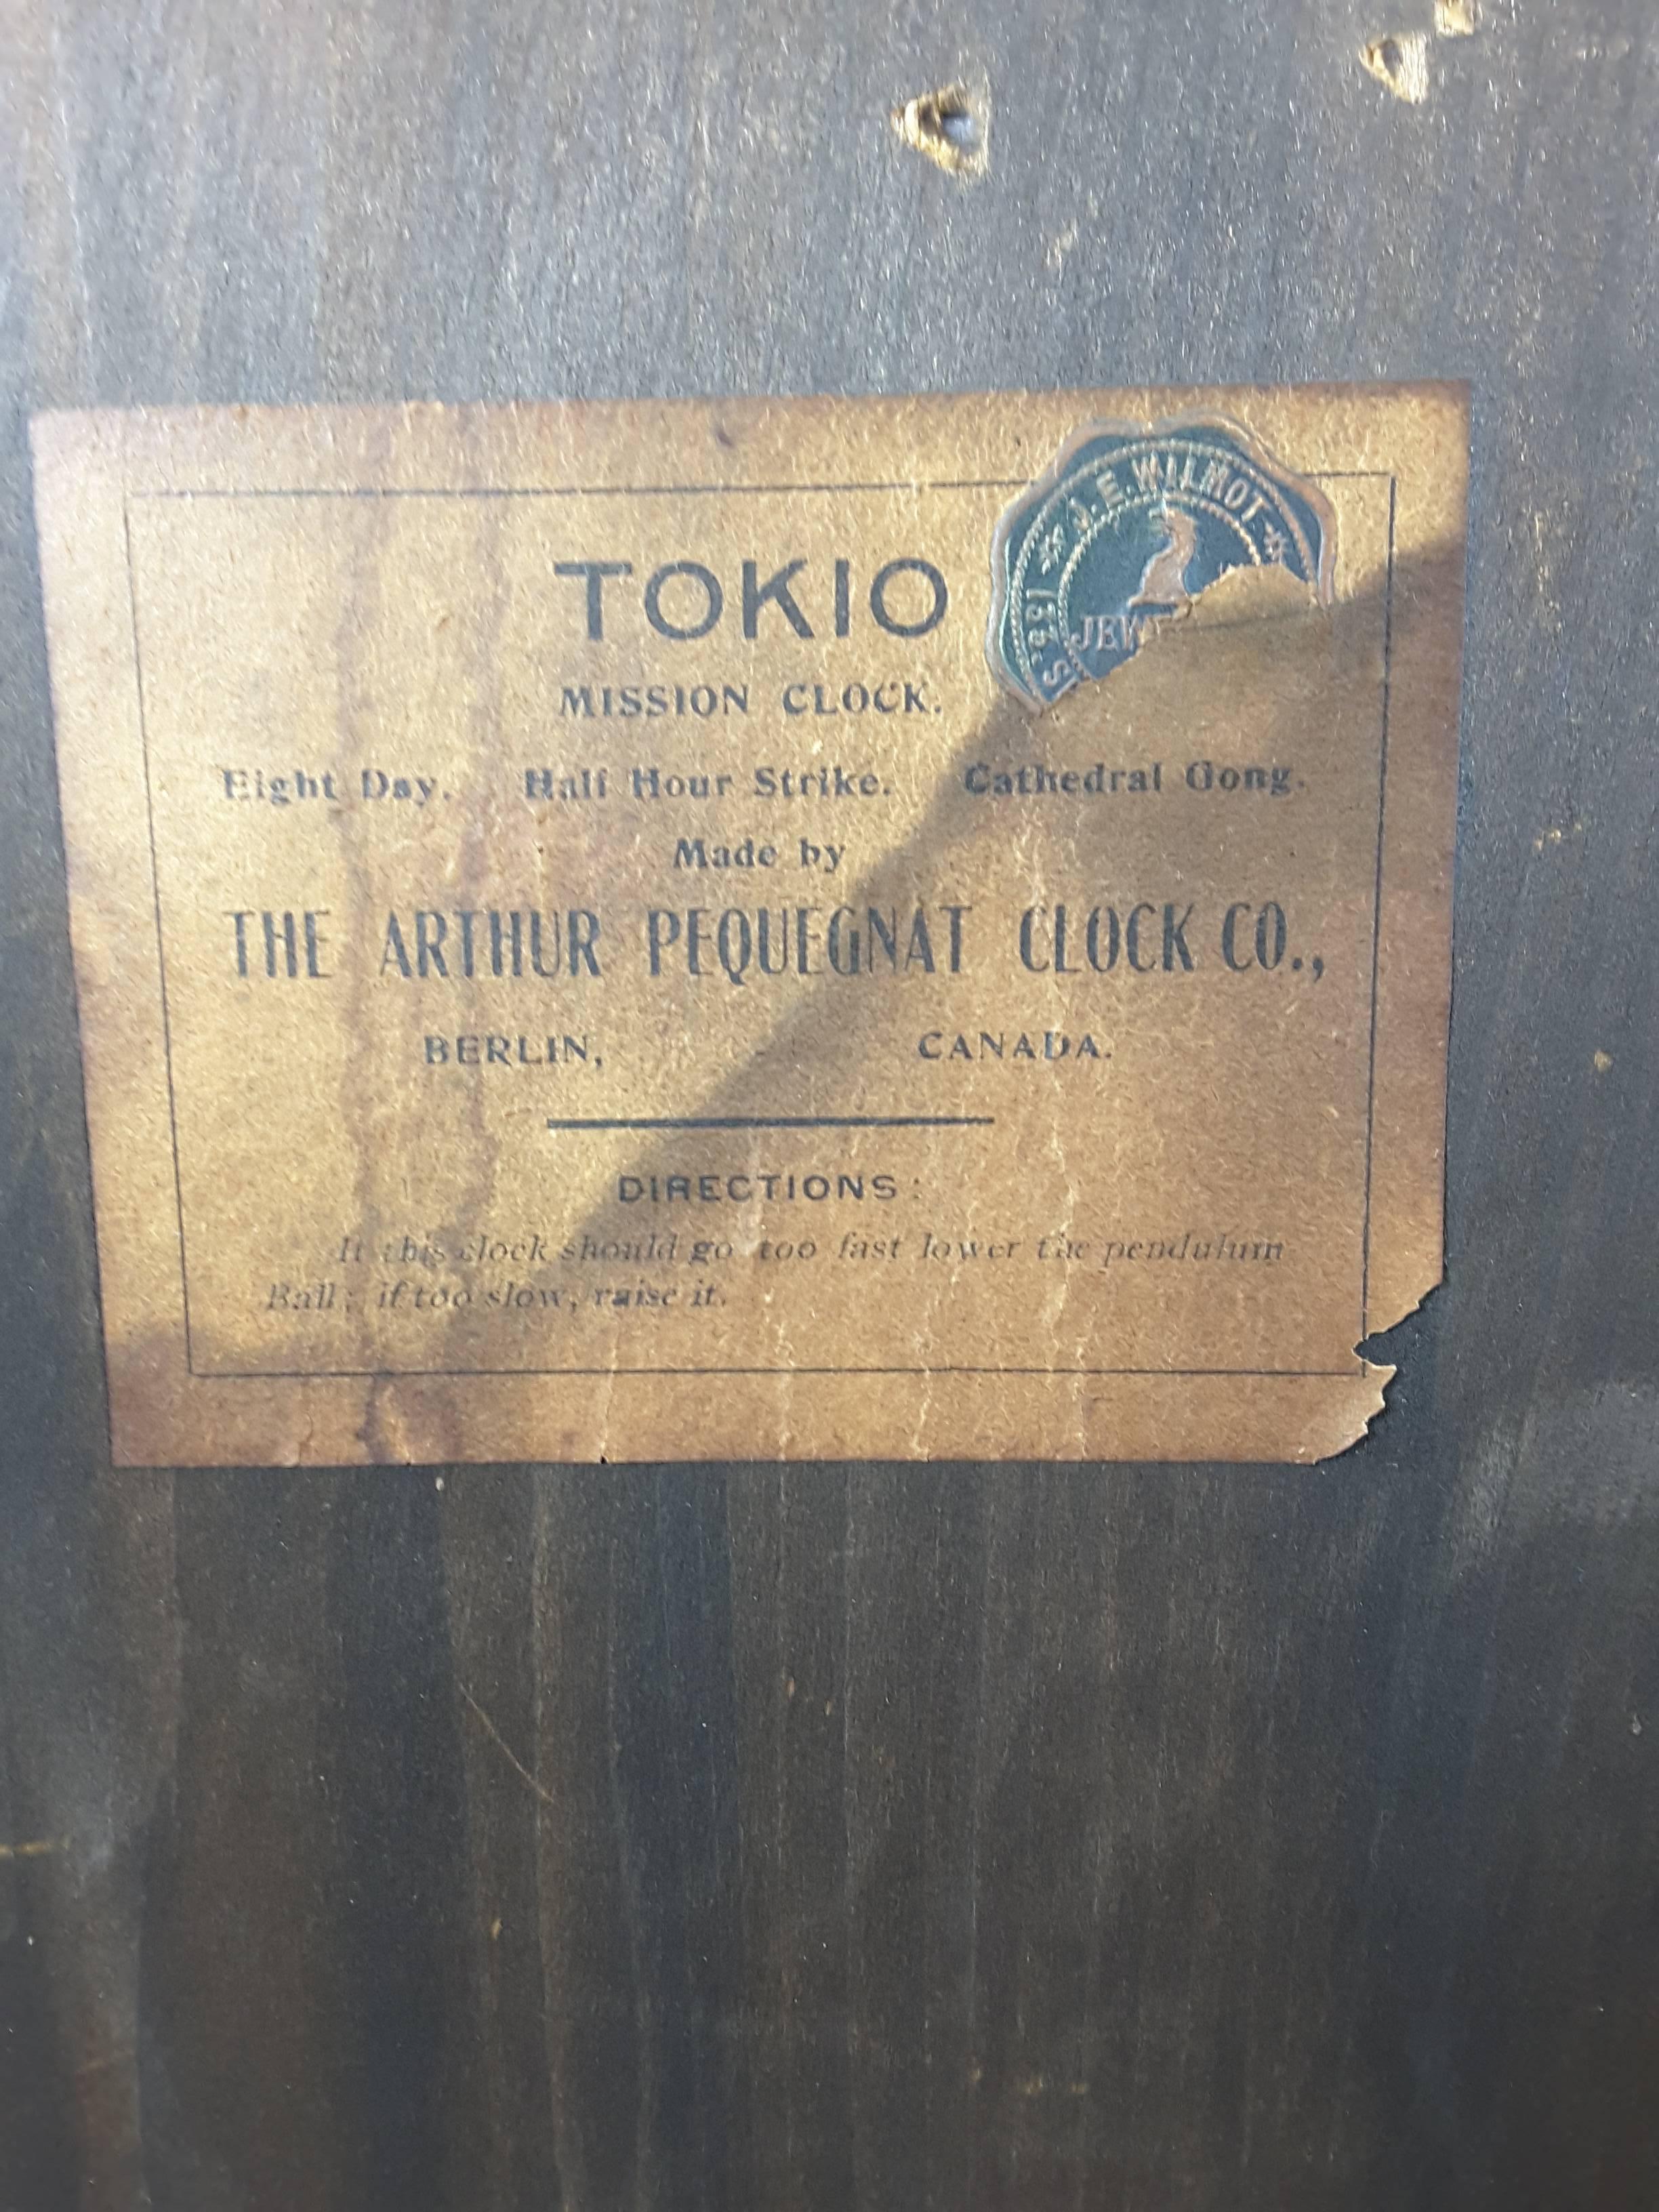 Woodwork Arthur Pequegnat Mantle Clock, Tokio Model, Mission Style, Circa 1910